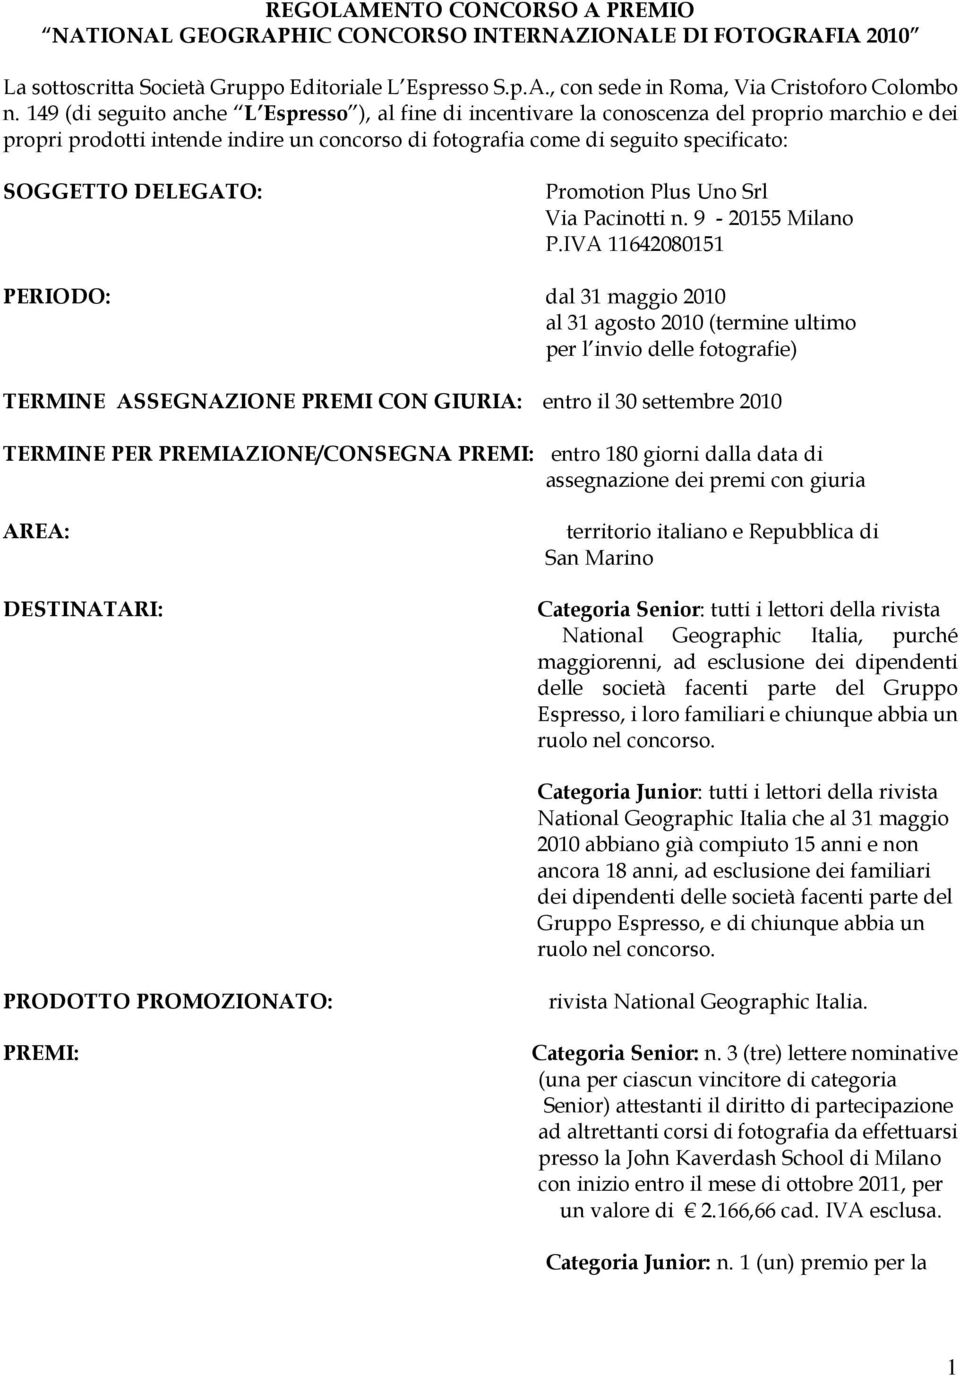 DELEGATO: Promotion Plus Uno Srl Via Pacinotti n. 9-20155 Milano P.